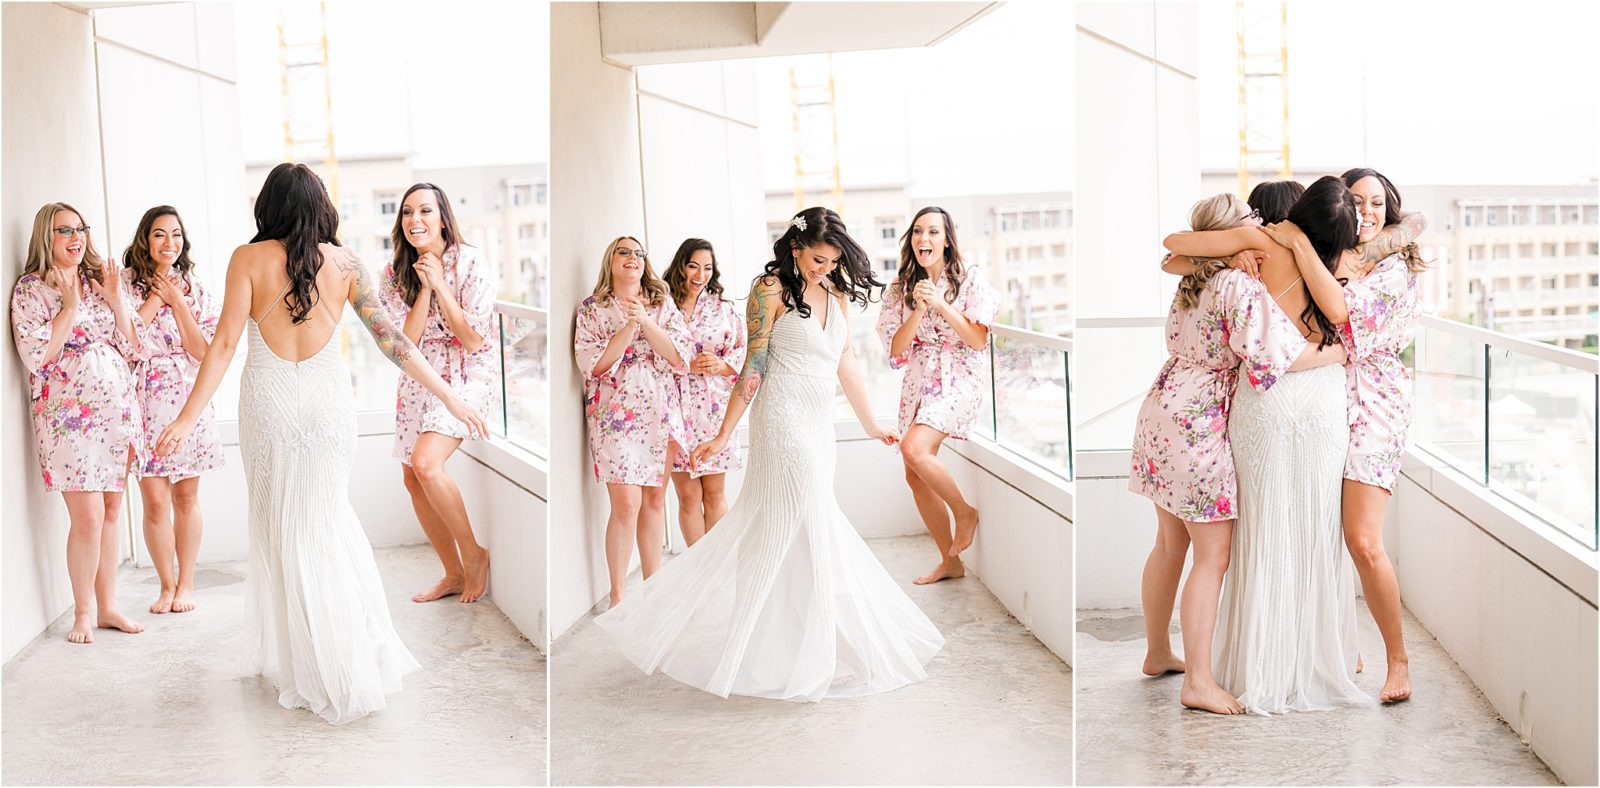 First look with Bridesmaids by Dallas Wedding Photographer Jillian Hogan 